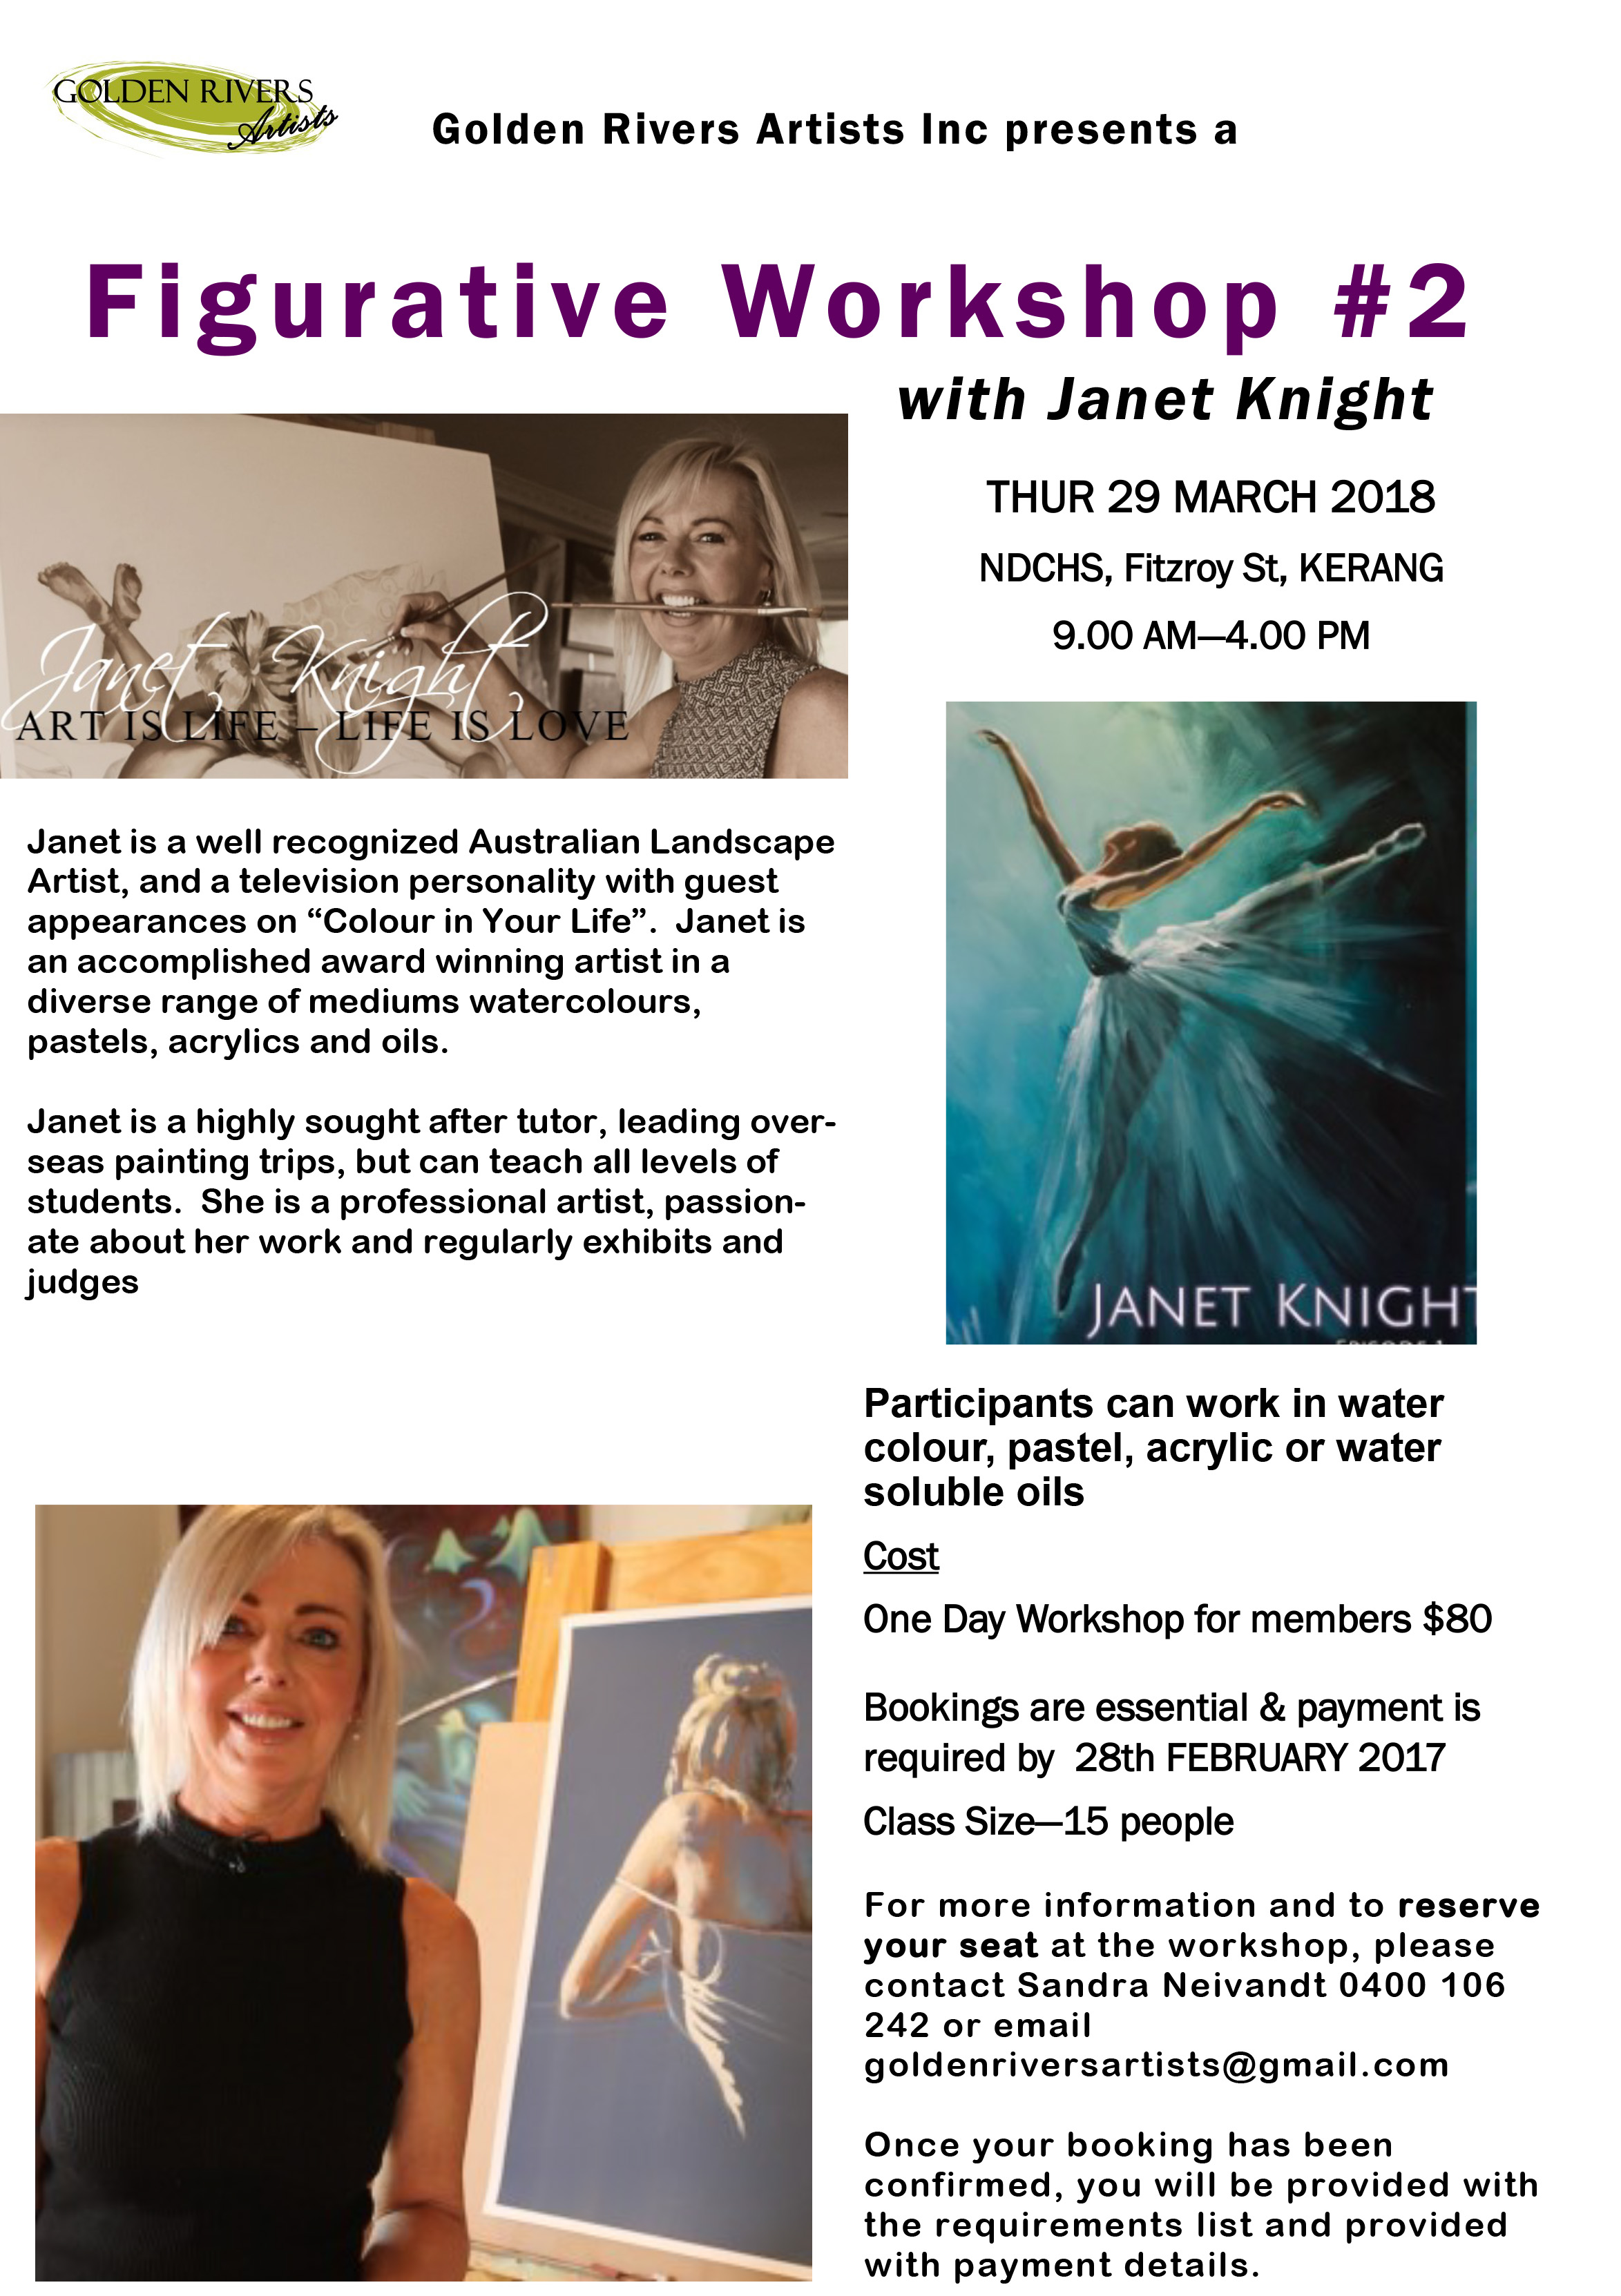 Janet-Knight-Workshop-2-Thur-29-March-2018-Figurative.jpg